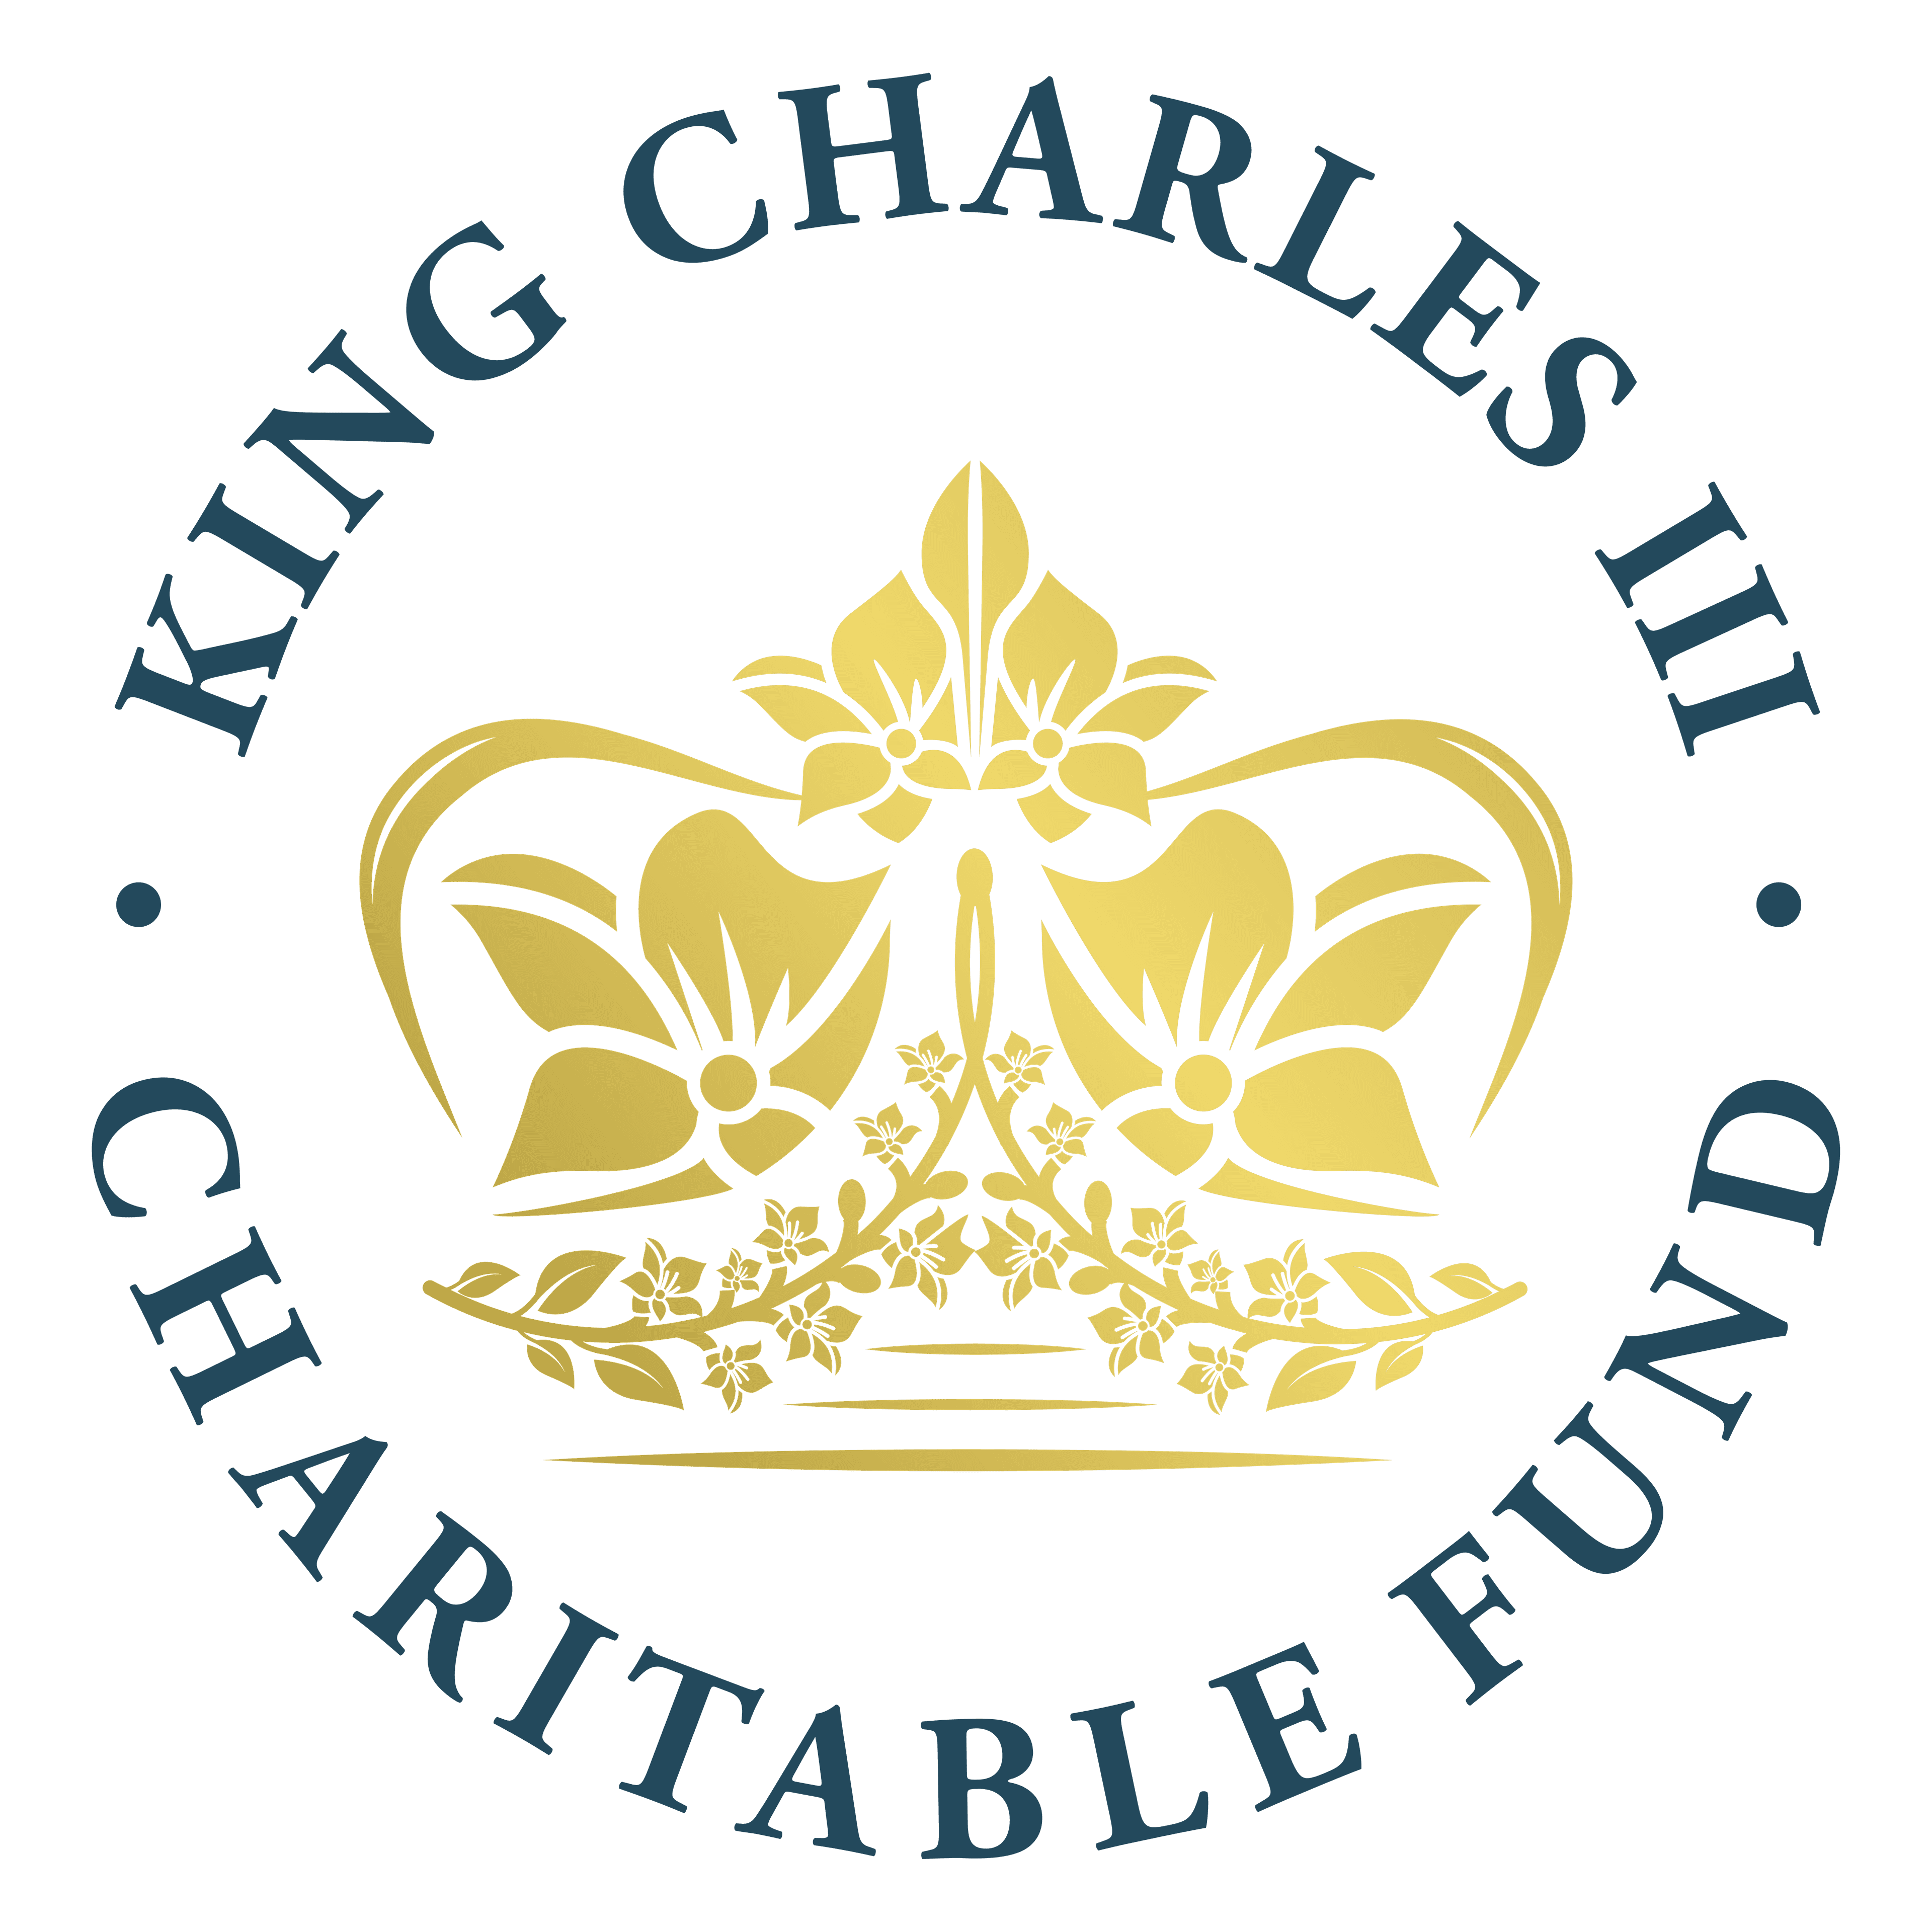 Image of King Charles III Charitable Fund.